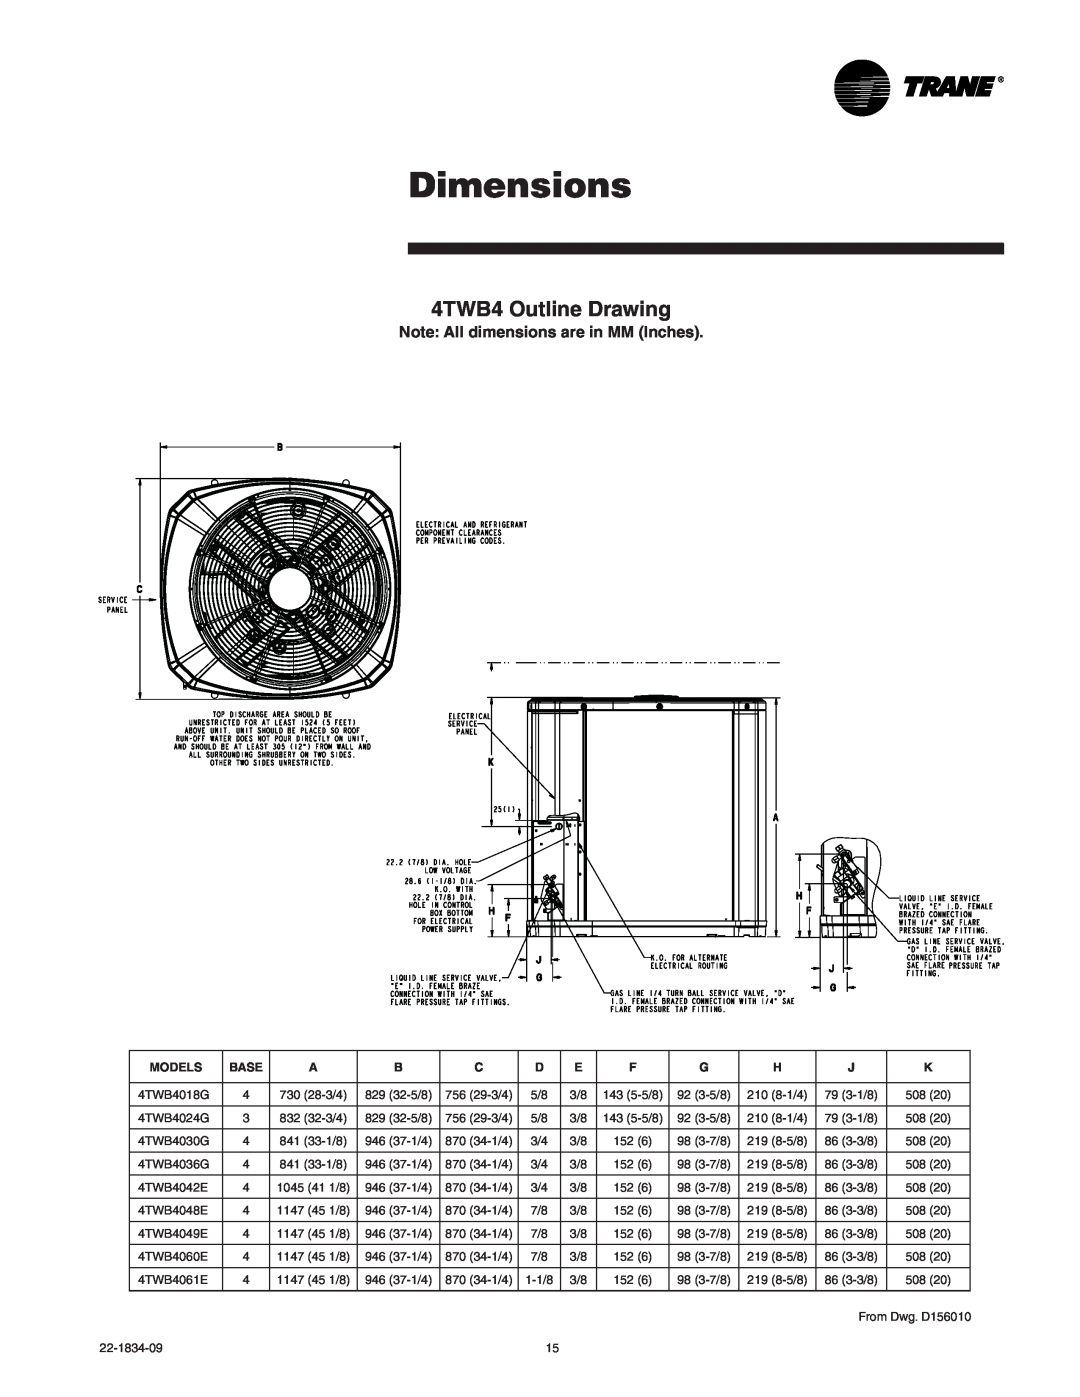 Trane manual Dimensions, 4TWB4 Outline Drawing, Models, Base 